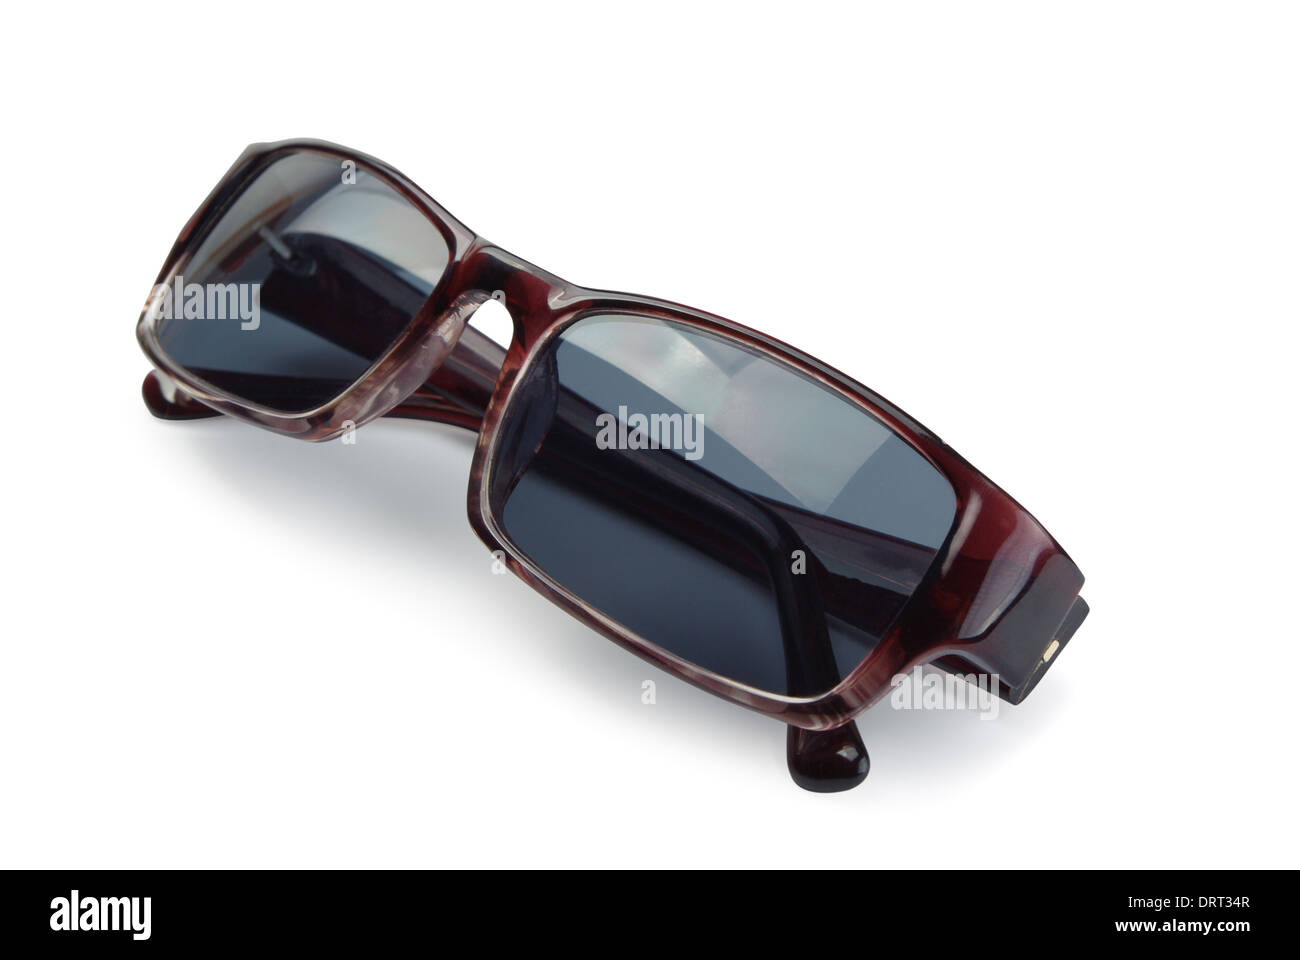 Sunglasses on a white background Stock Photo - Alamy